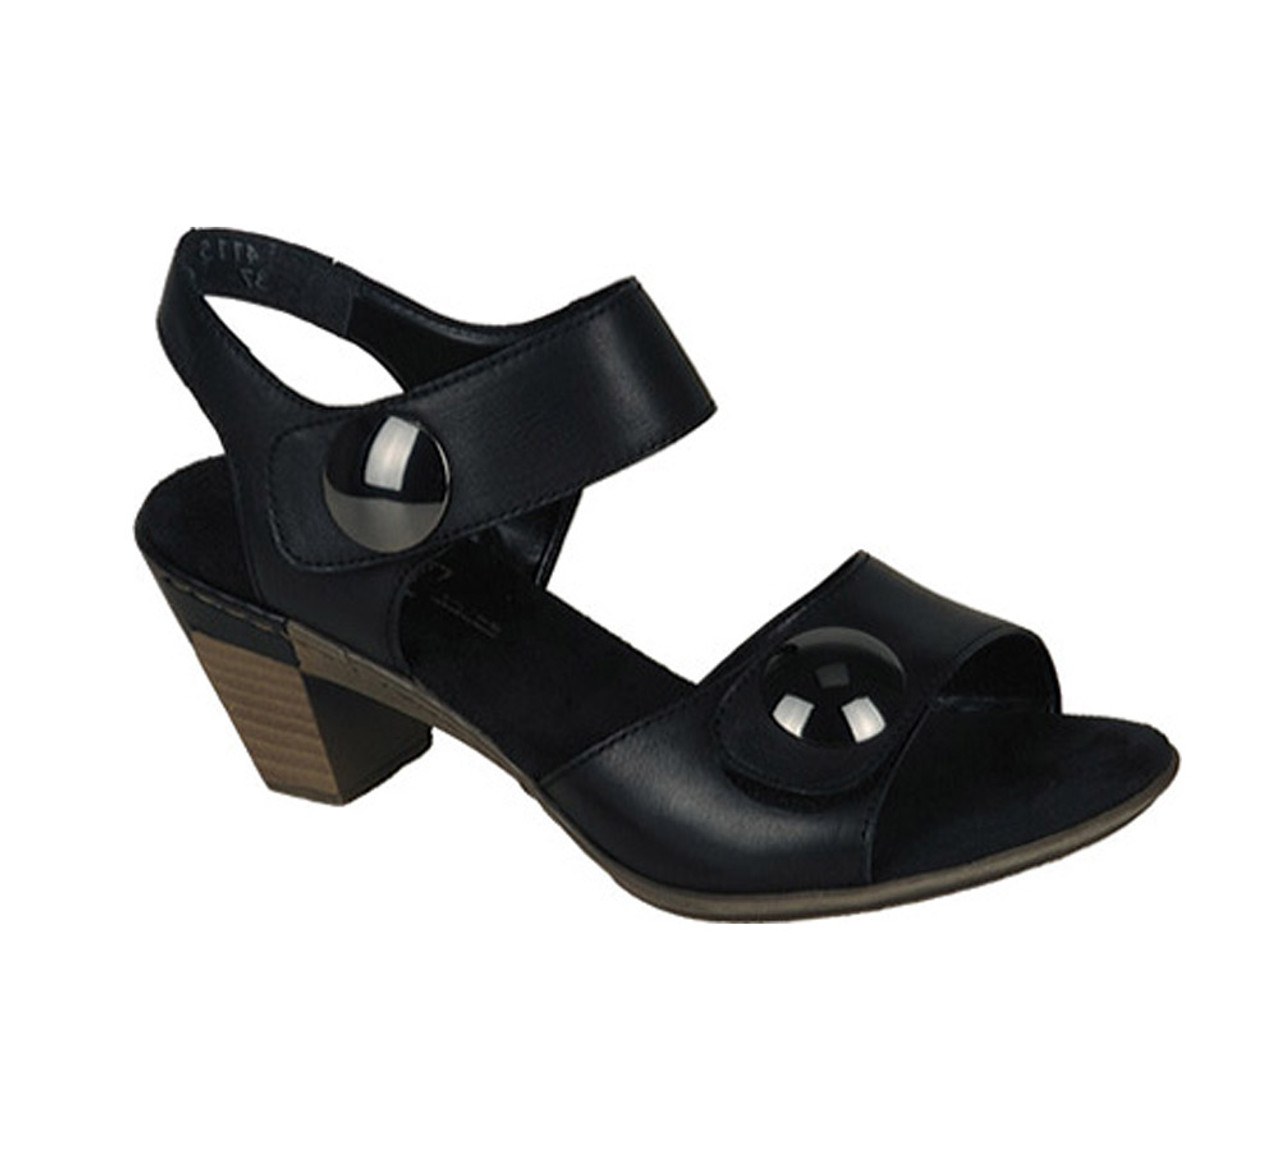 Rieker Sandal Black | Discount Rieker Ladies Sandals & More - Shoolu.com | Shoolu.com